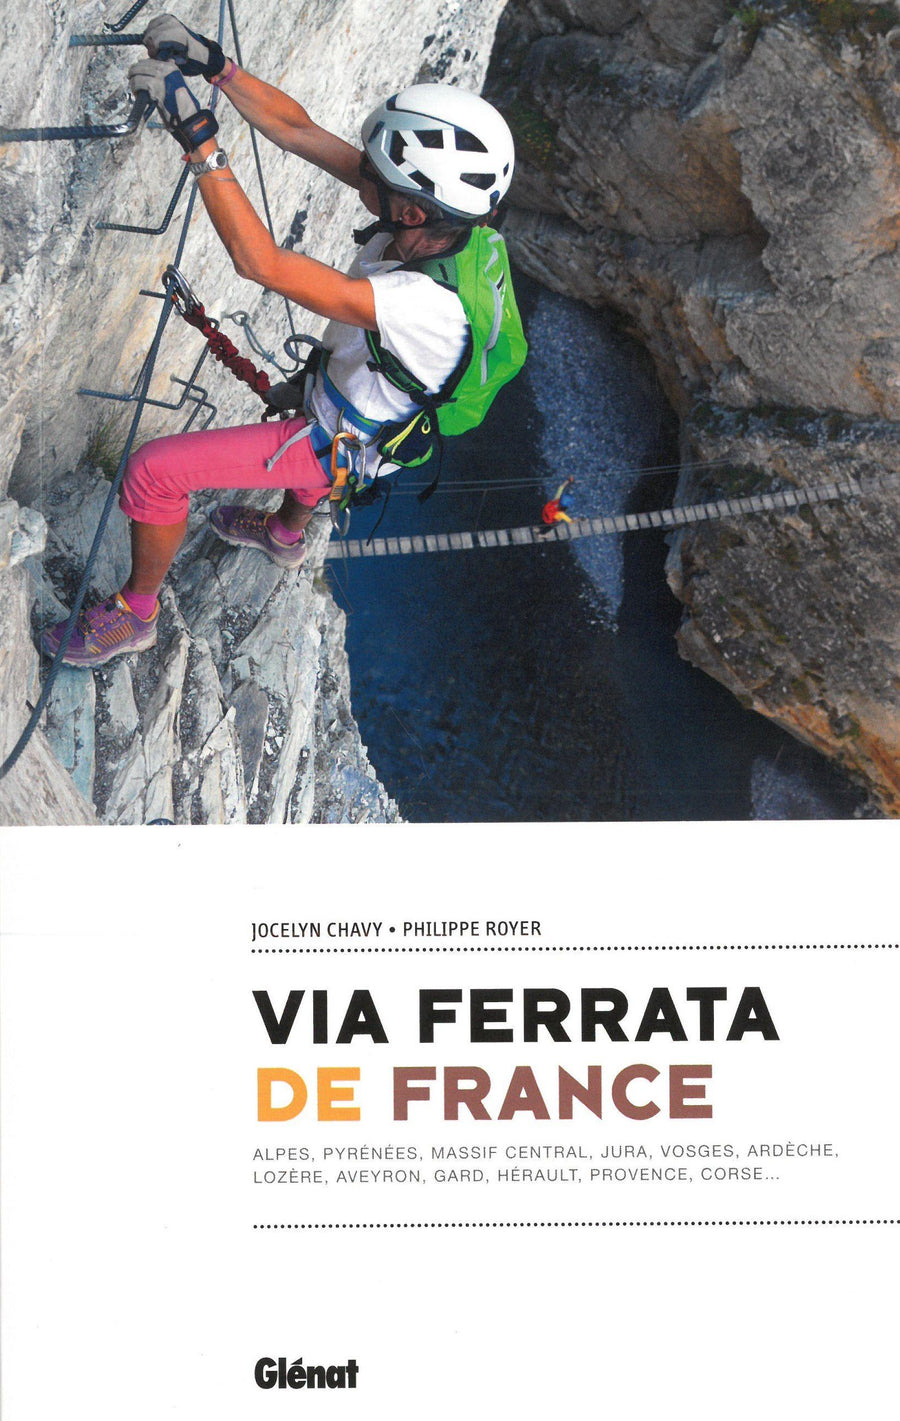 Guide - Les Via Ferrata de France | Glénat guide de randonnée Glénat 